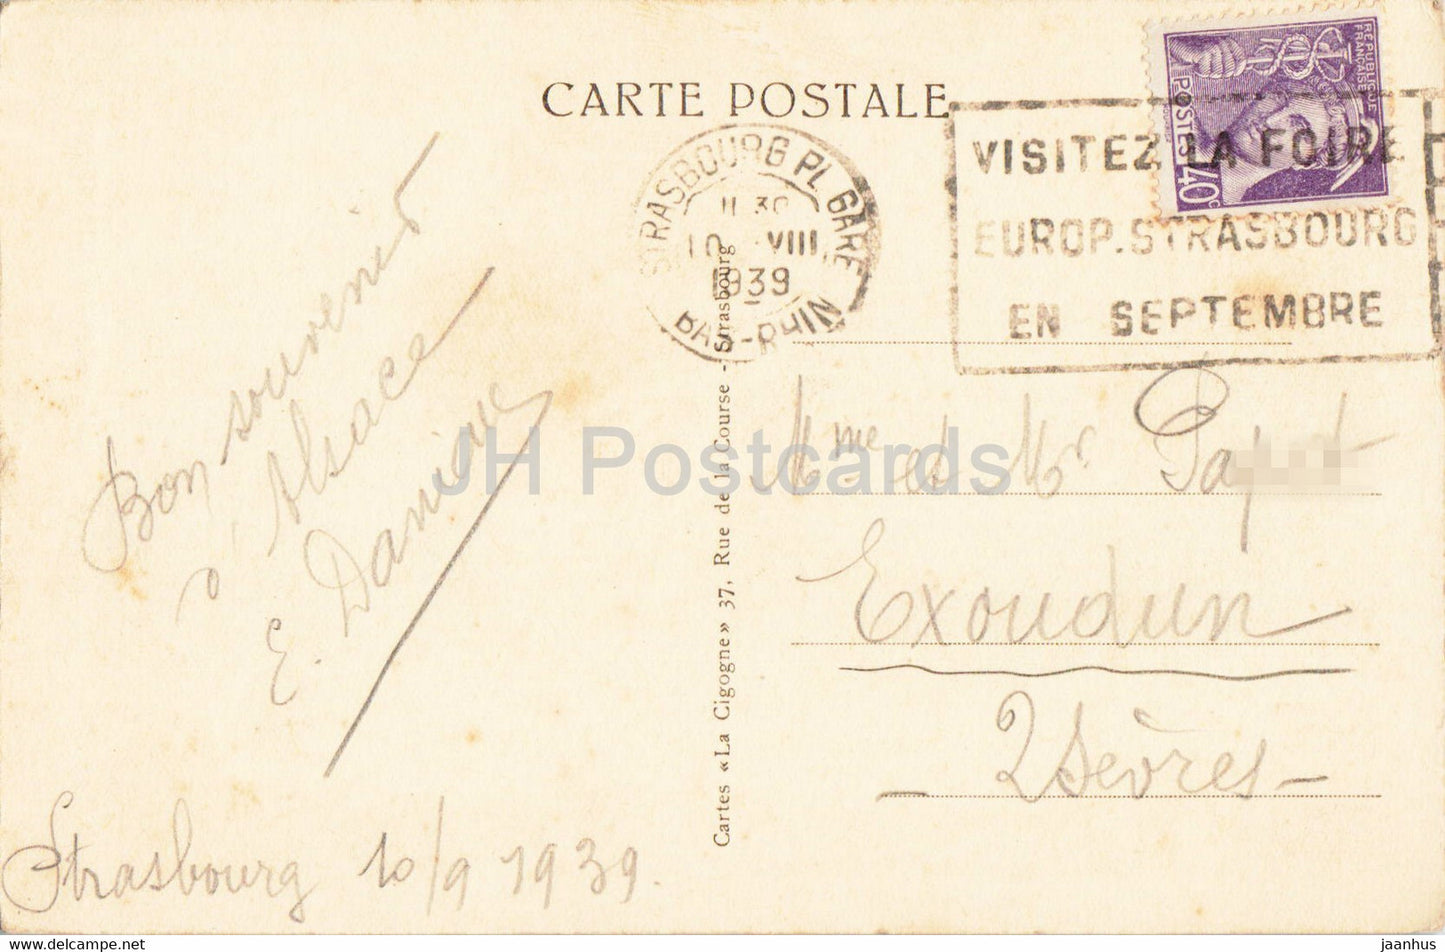 Strassburg i E - Straßburg - Kathedrale - L'Horloge Astronomique - Kathedrale 479 - alte Postkarte - 1939 - Frankreich - gebraucht